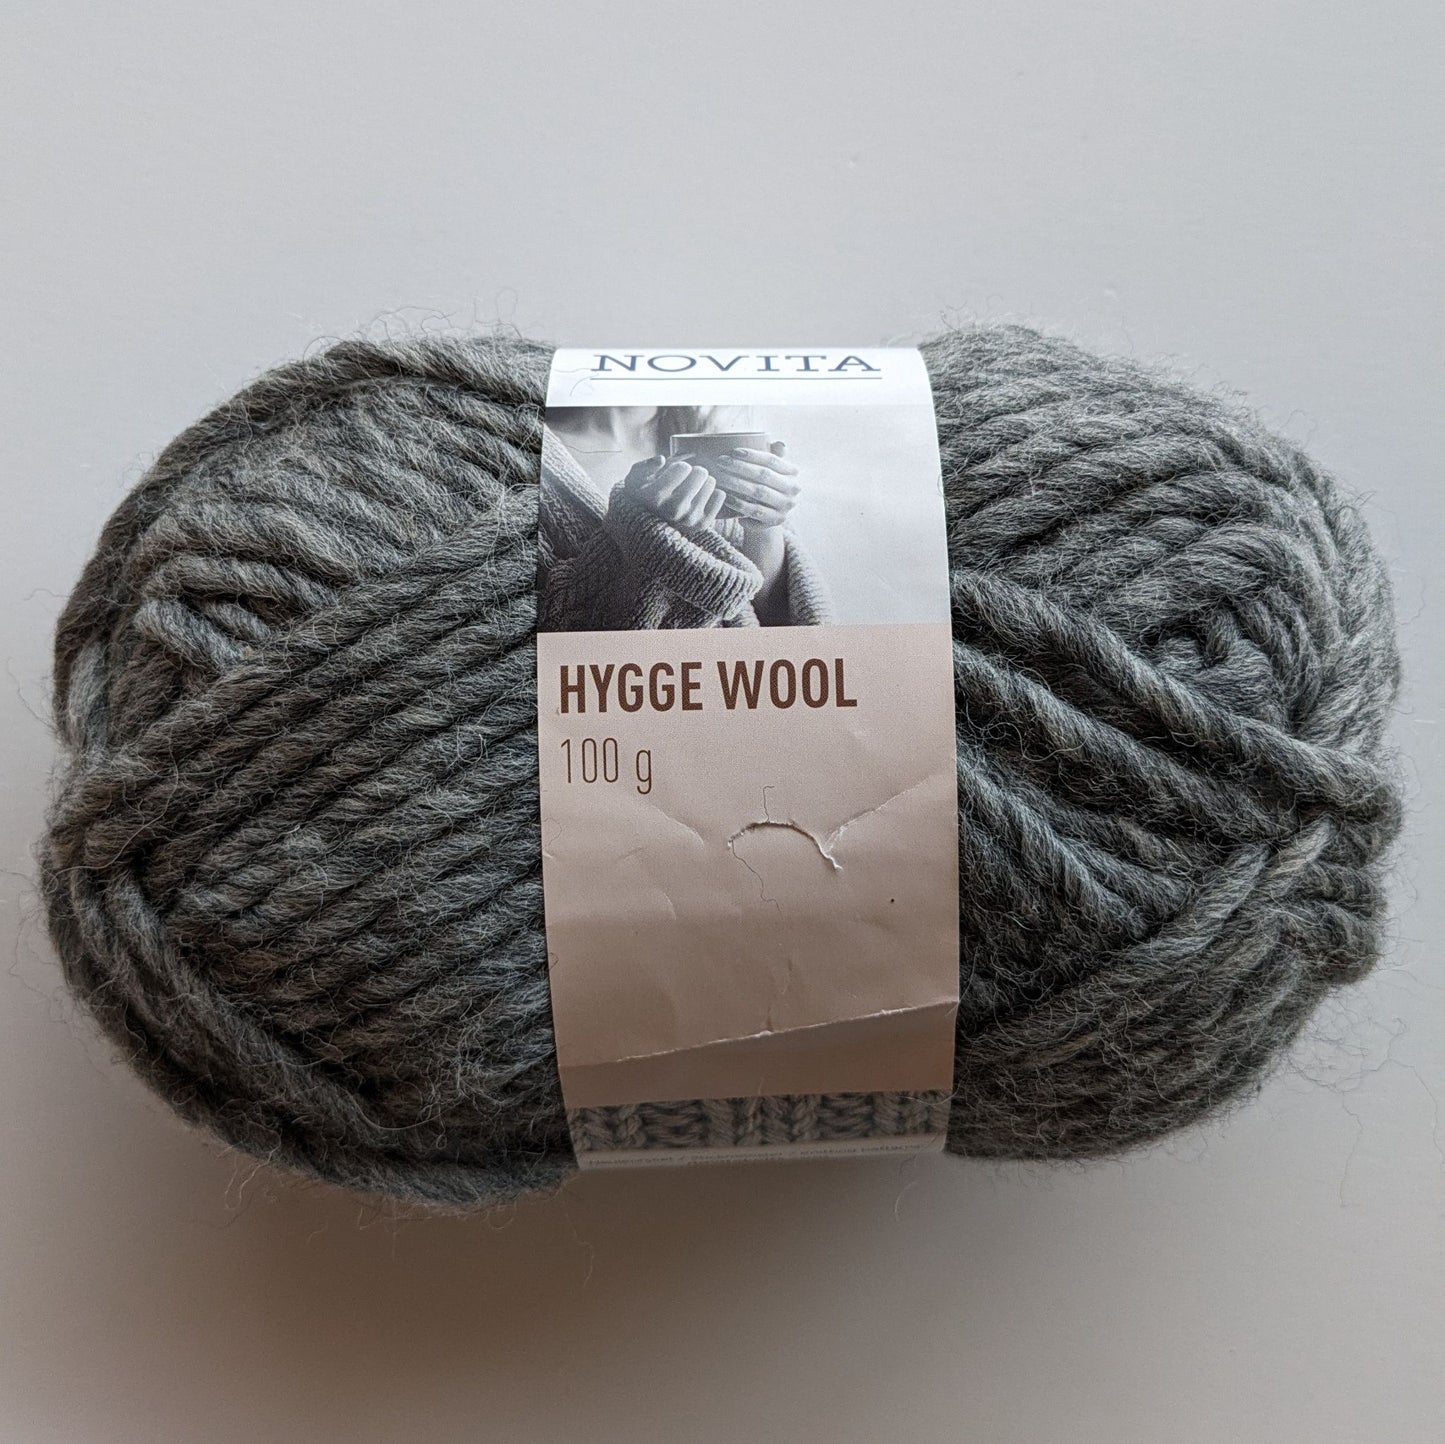 Novita hygge wool - 1